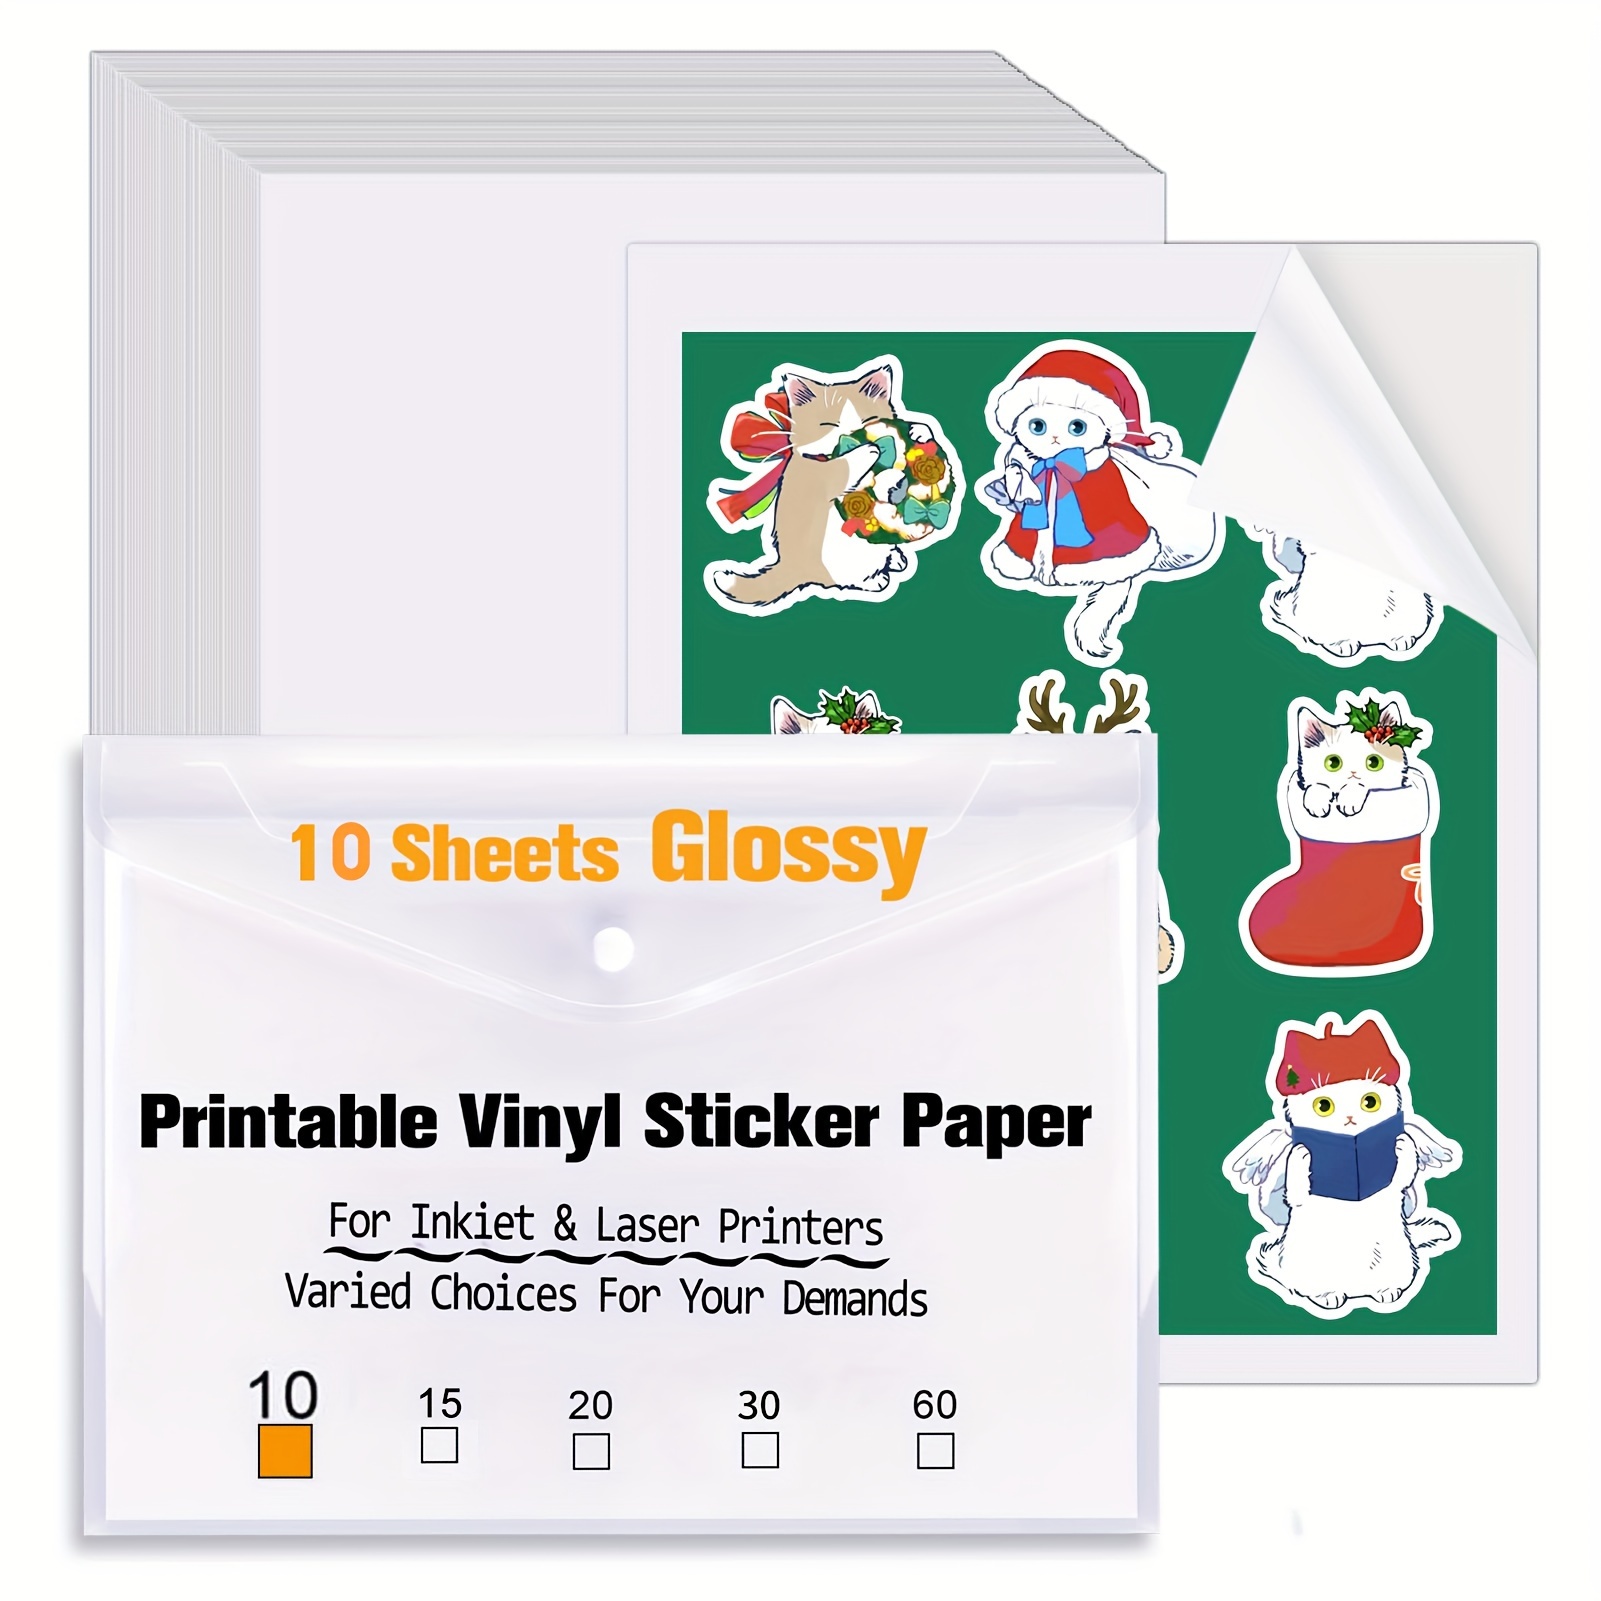 Printable Vinyl Sticker Paper Laser Glossy 50 sheets